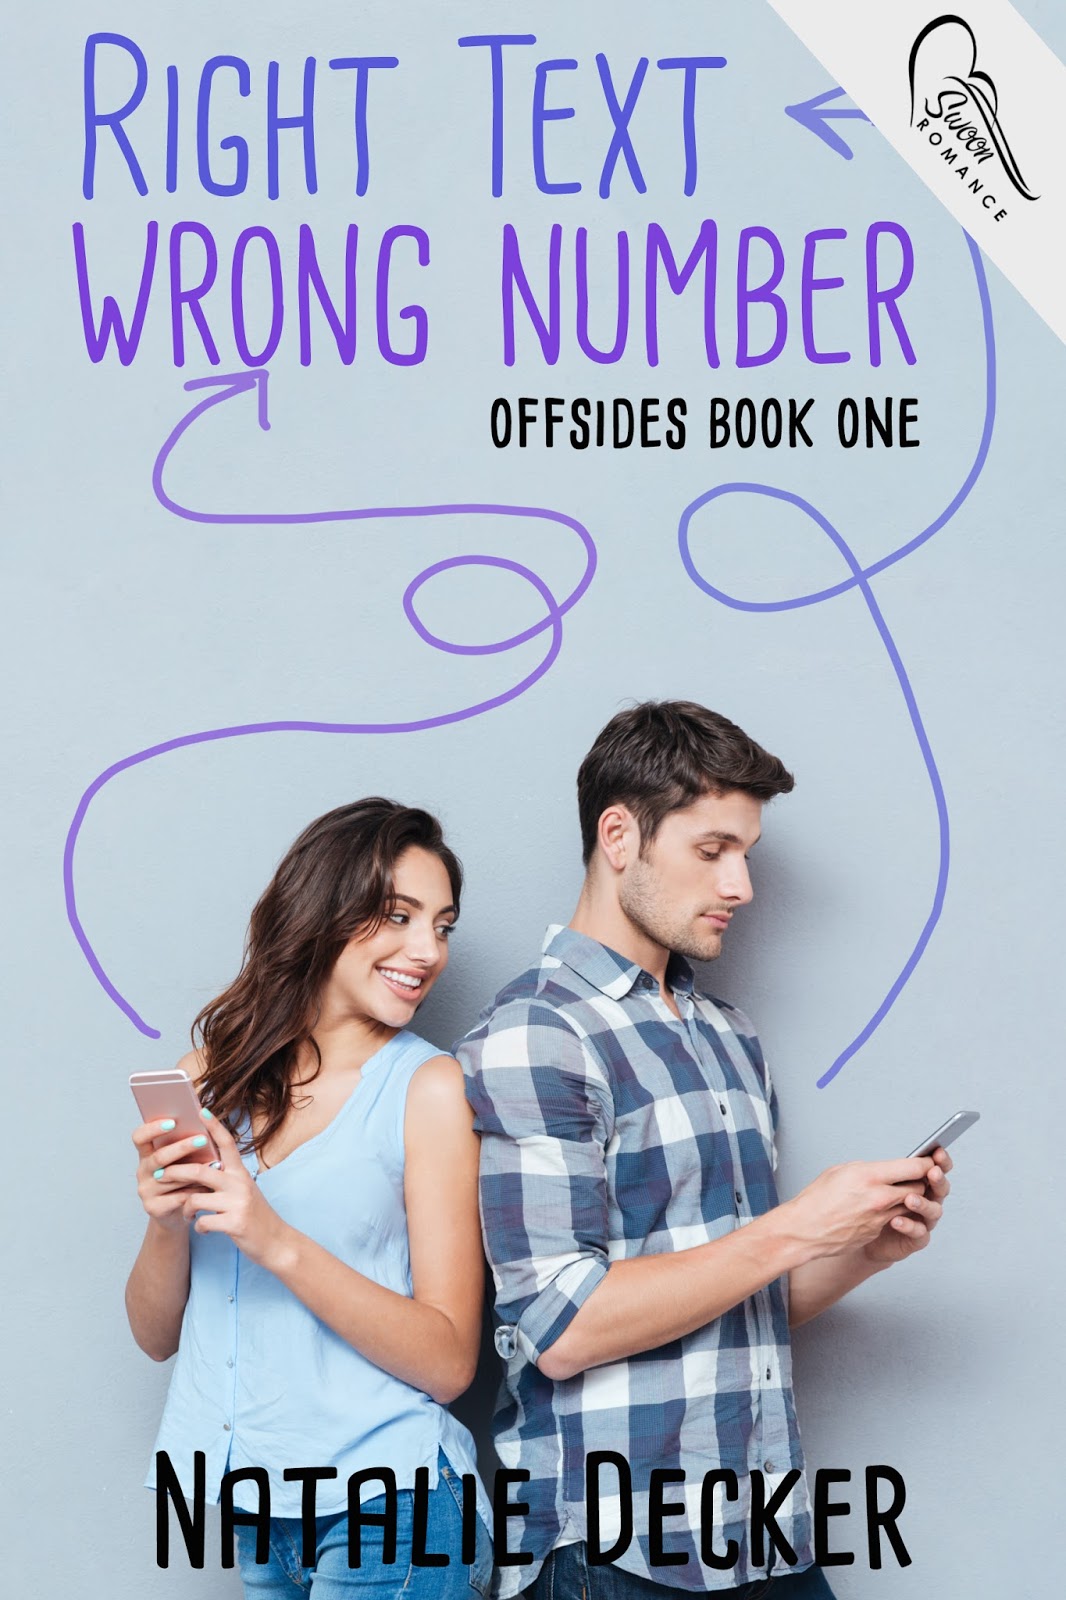 Wrong number. Kiss the Sky book. Book wrong Grip. Wrong book